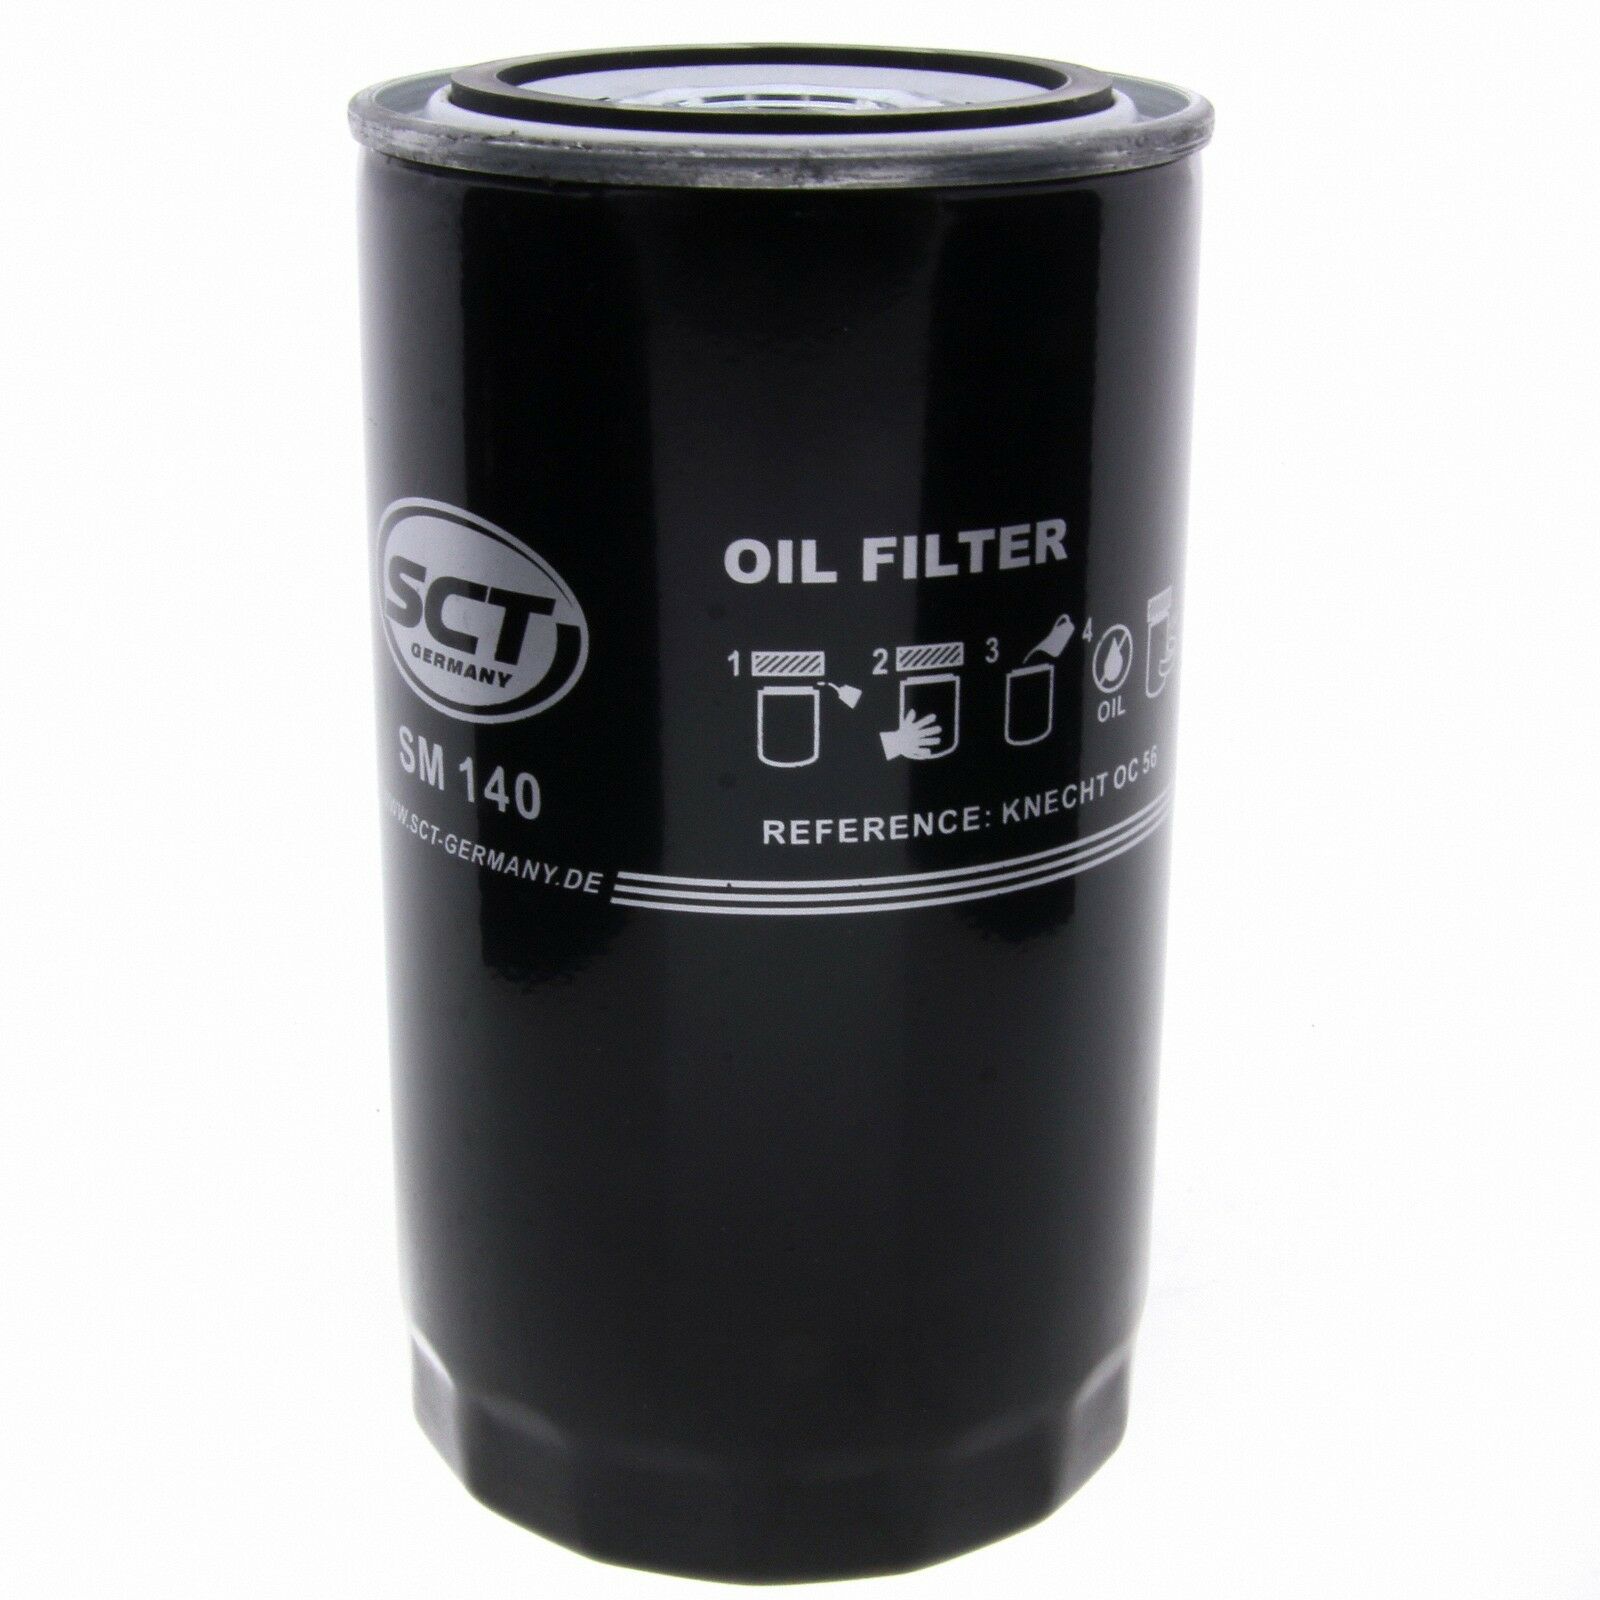 SCT Ölfilter SM140 Filter Motorfilter Servicefilter Anschraubfilter DAF FAUN DEUTZ LEYBOLD TAM 